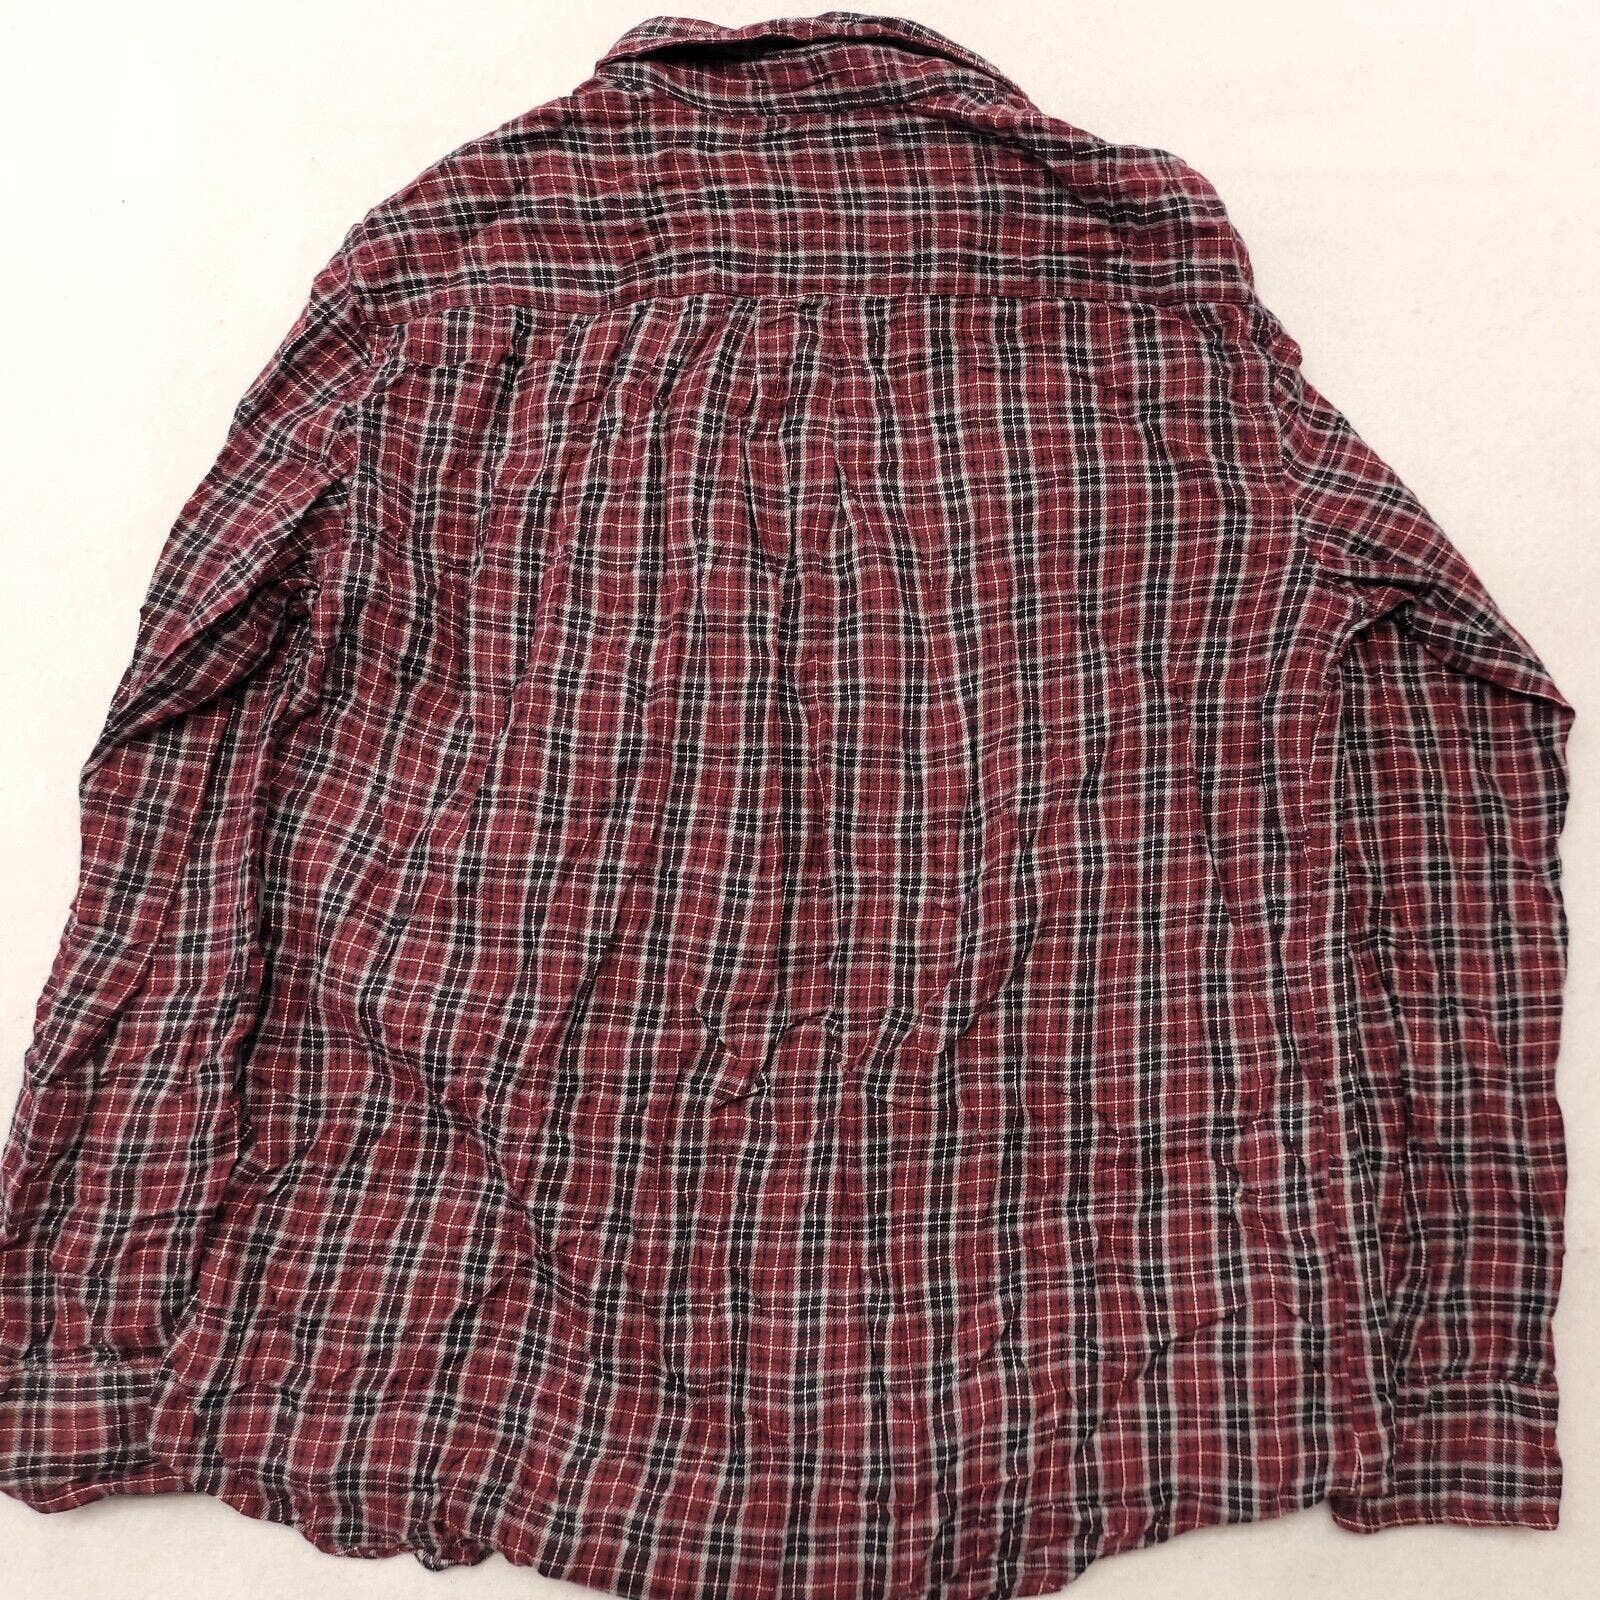 St. Johns Bay St Johns Bay Tartan Flannel Shirt Mens Size Large Red Black Size US L / EU 52-54 / 3 - 9 Preview